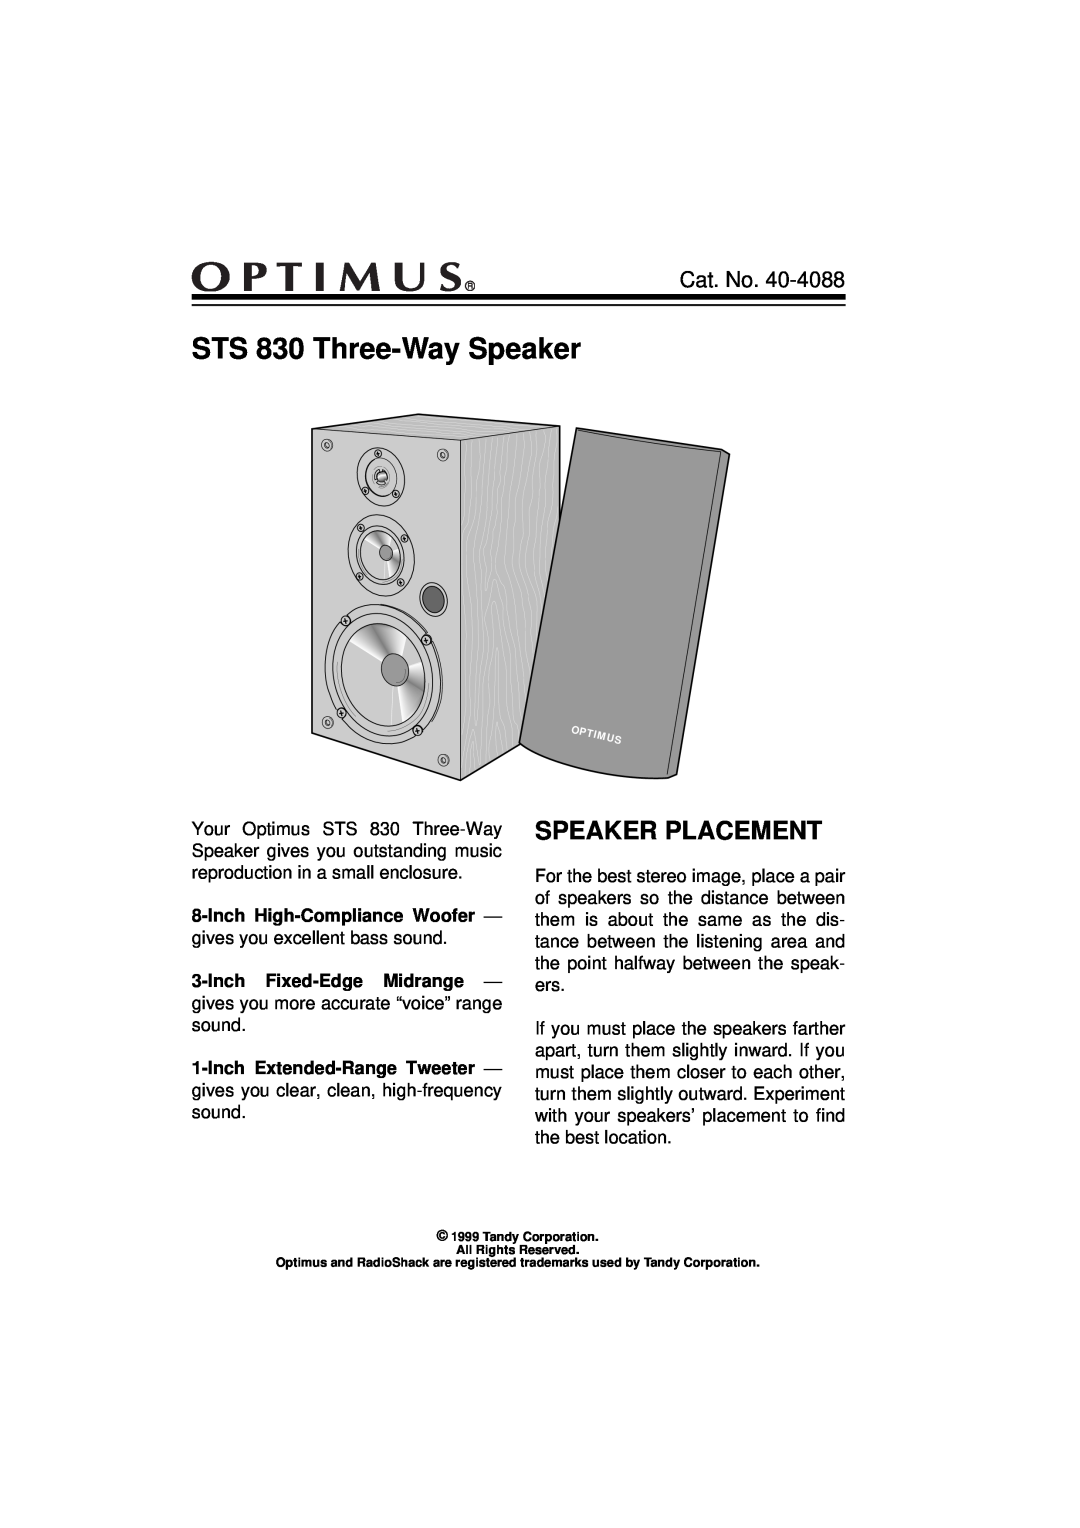 Optimus manual Speaker Placement, STS 830 Three-WaySpeaker, Cat. No 